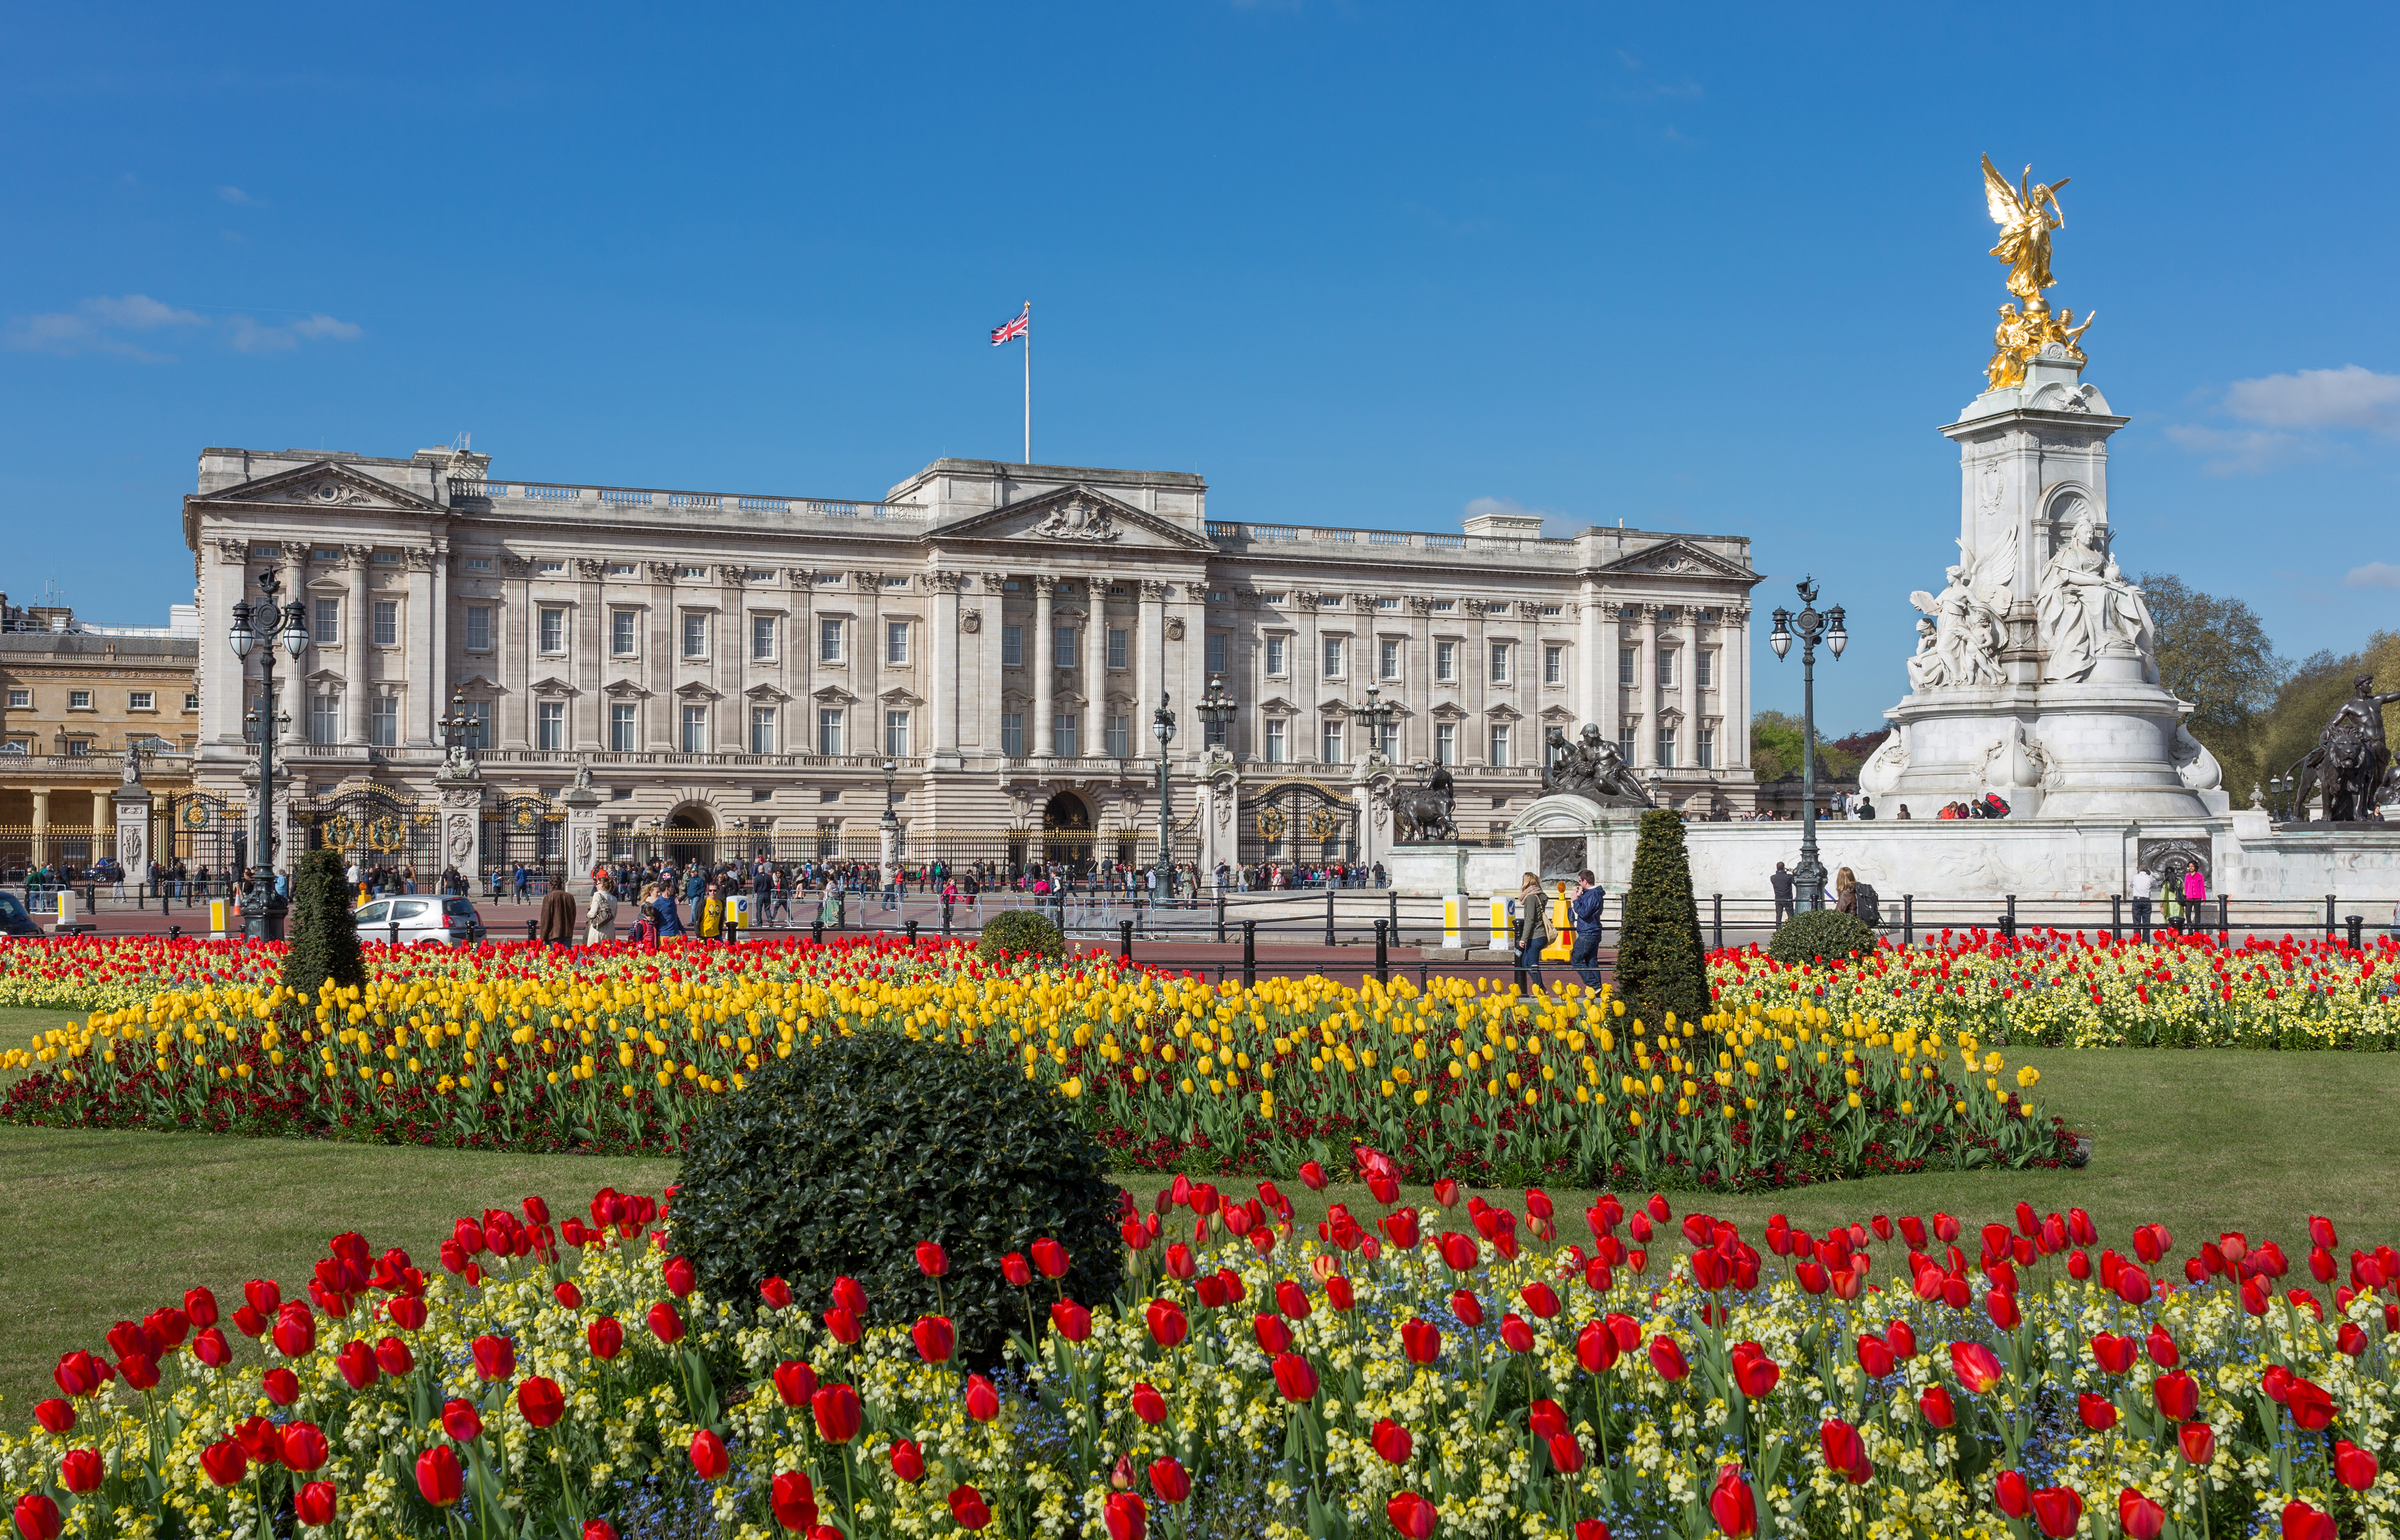 Buckingham_Palace_from_gardens,_London,_UK